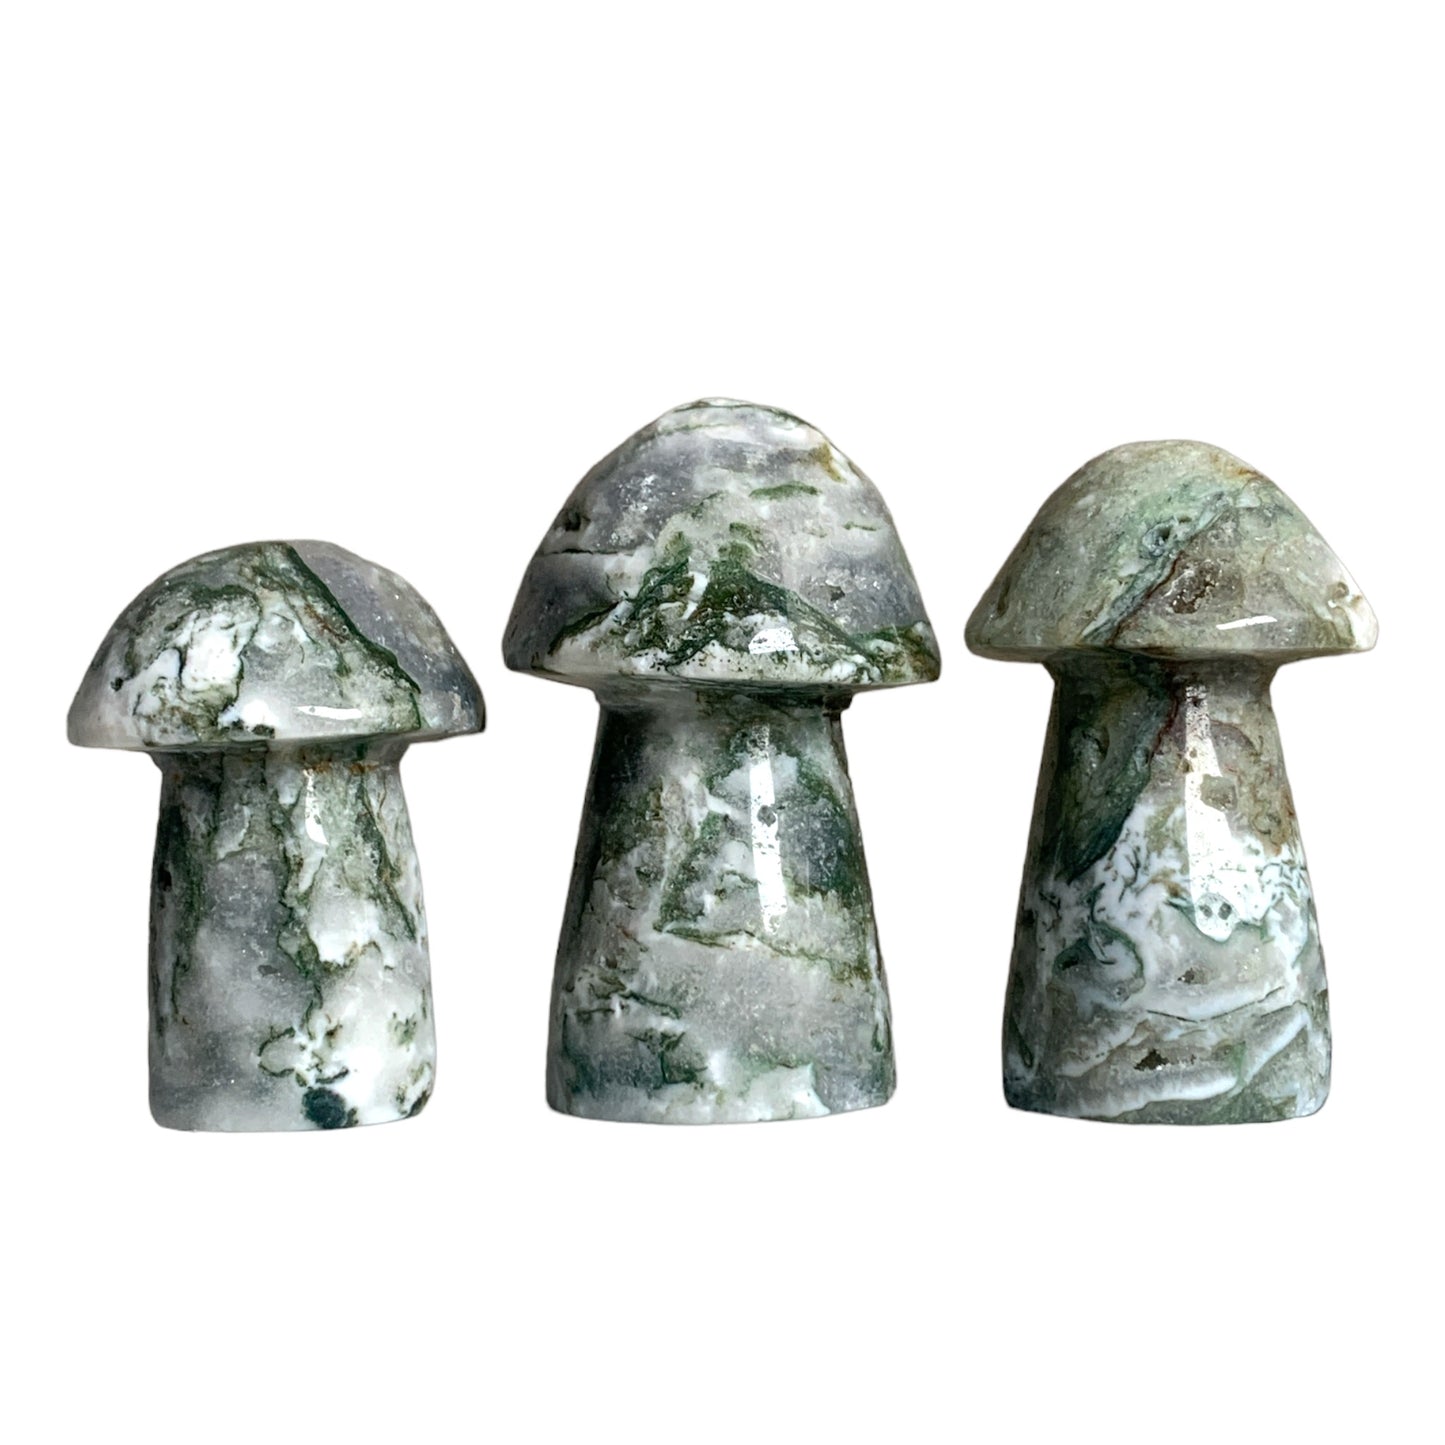 MOSS AGATE Large Mushrooms - 47-65 mm - Price per gram - China - NEW722